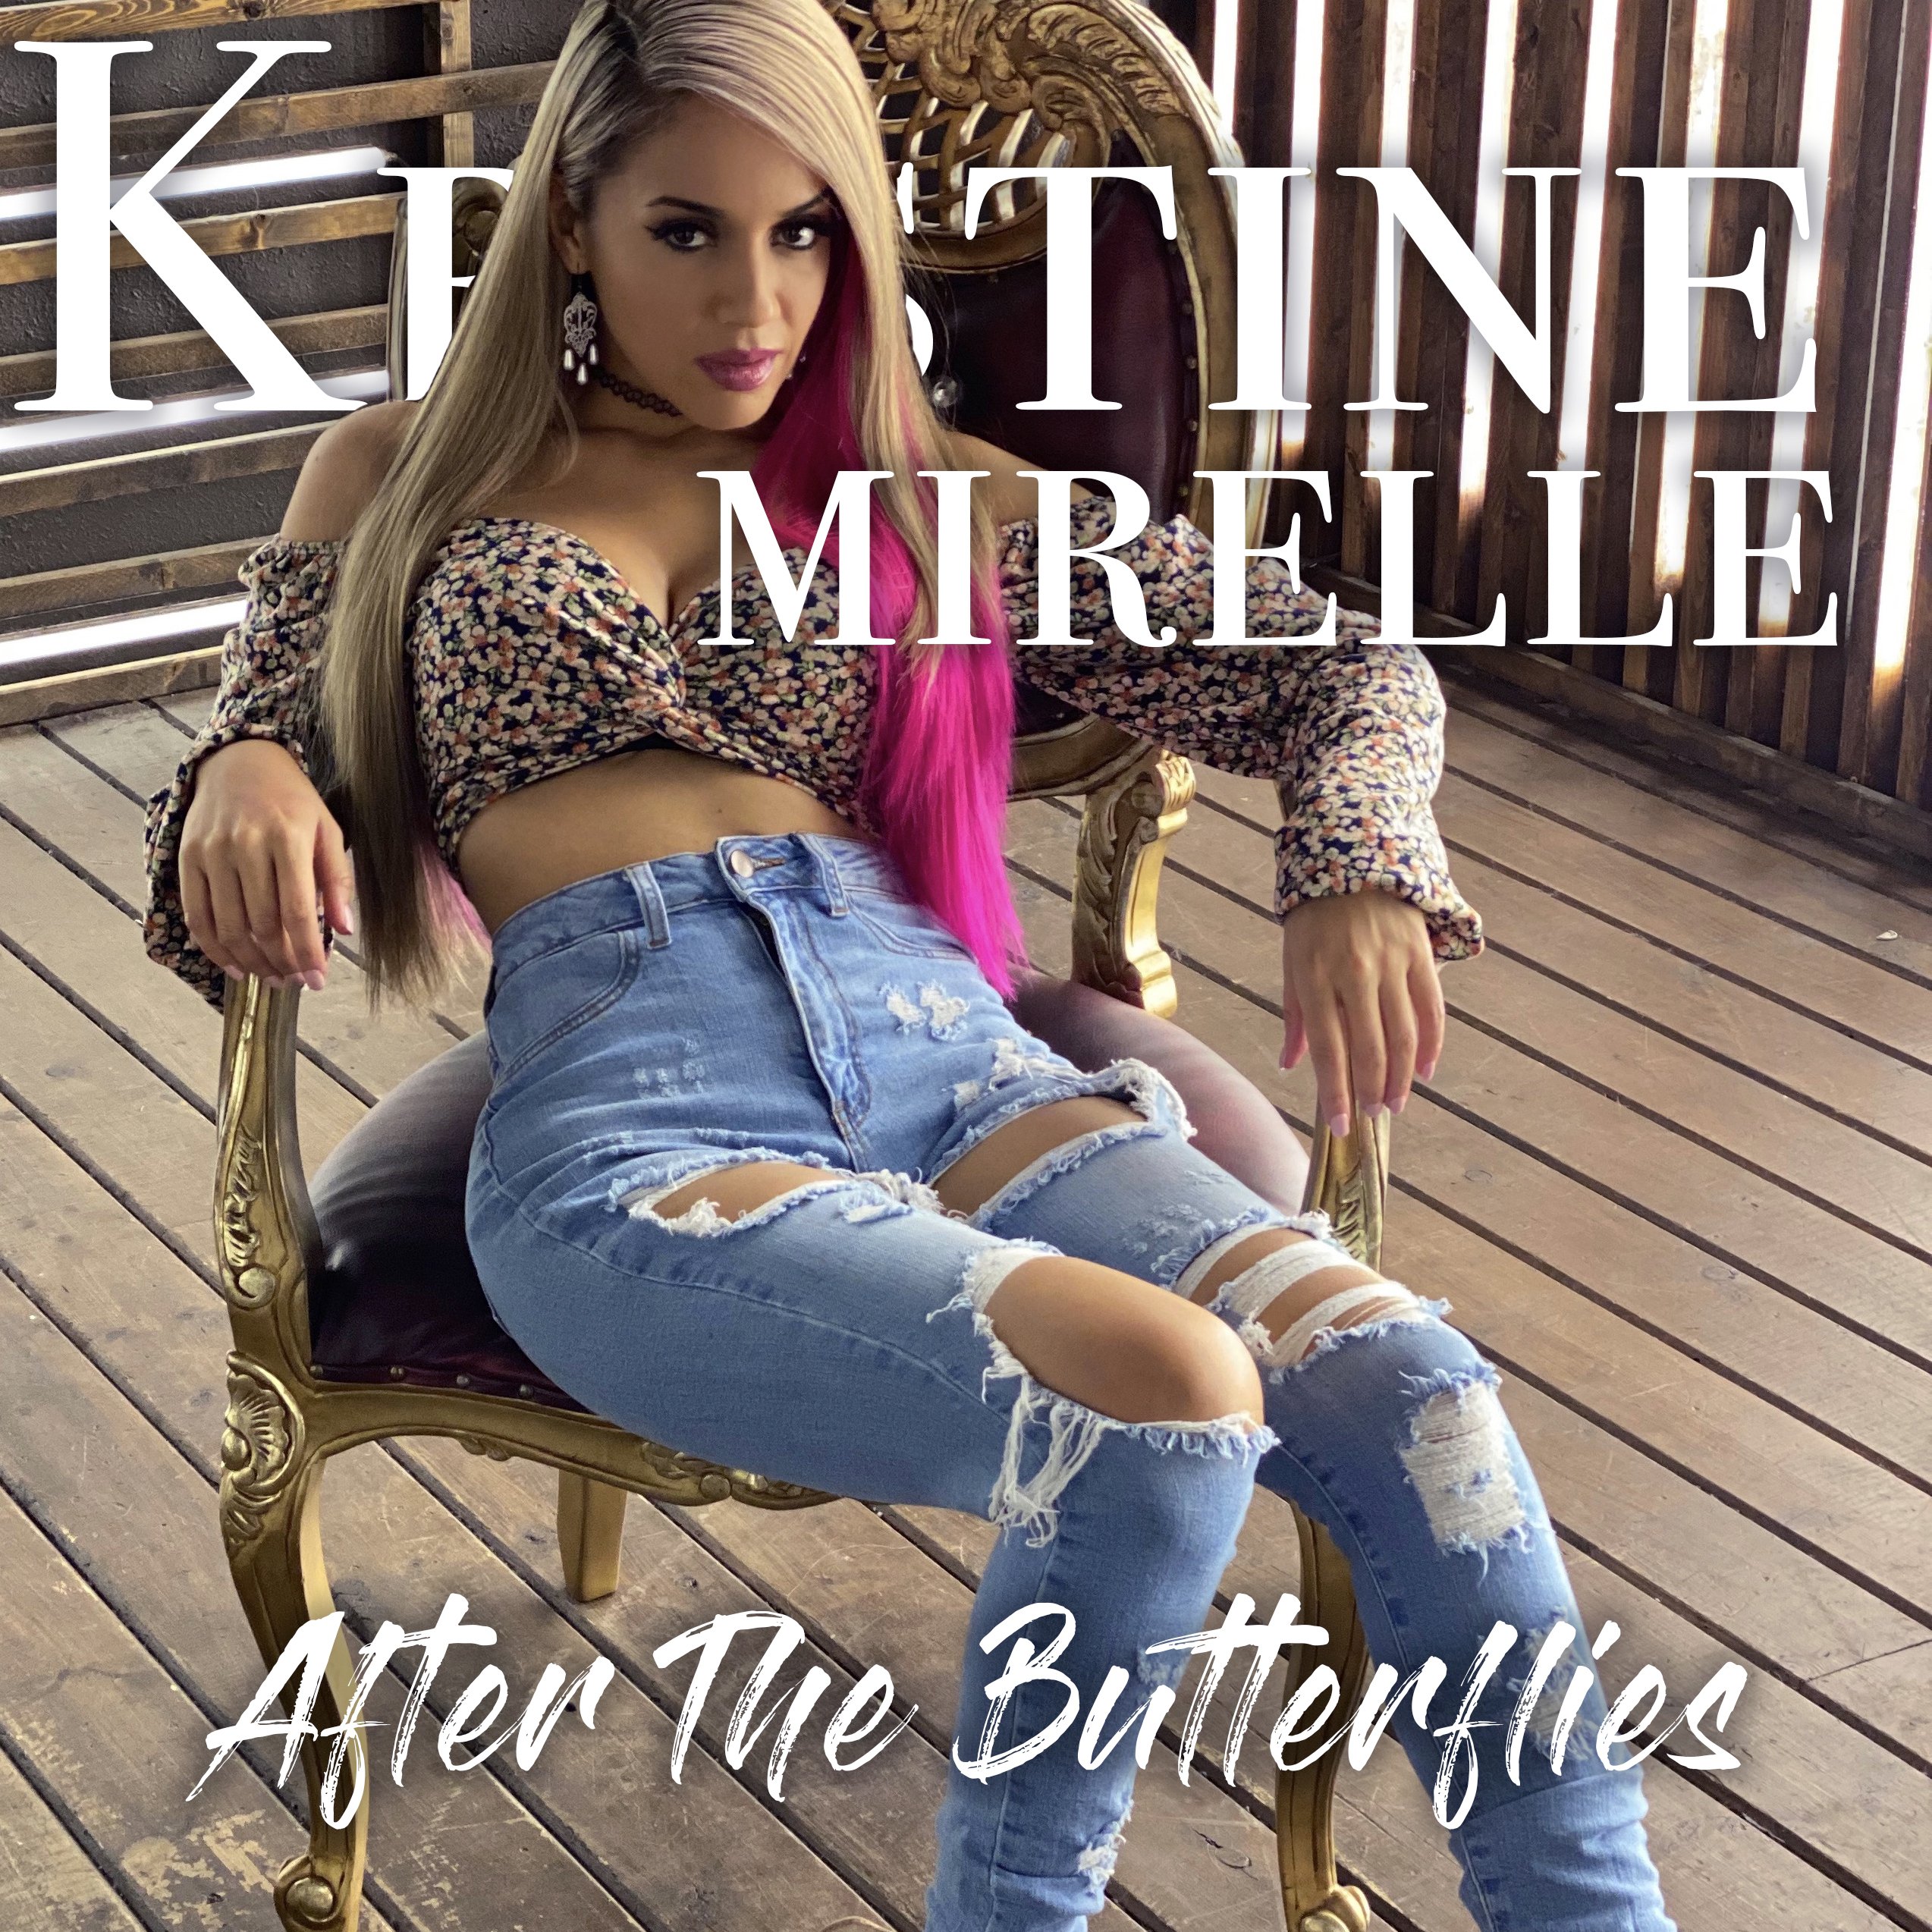 Kristine Mirelle | ReverbNation